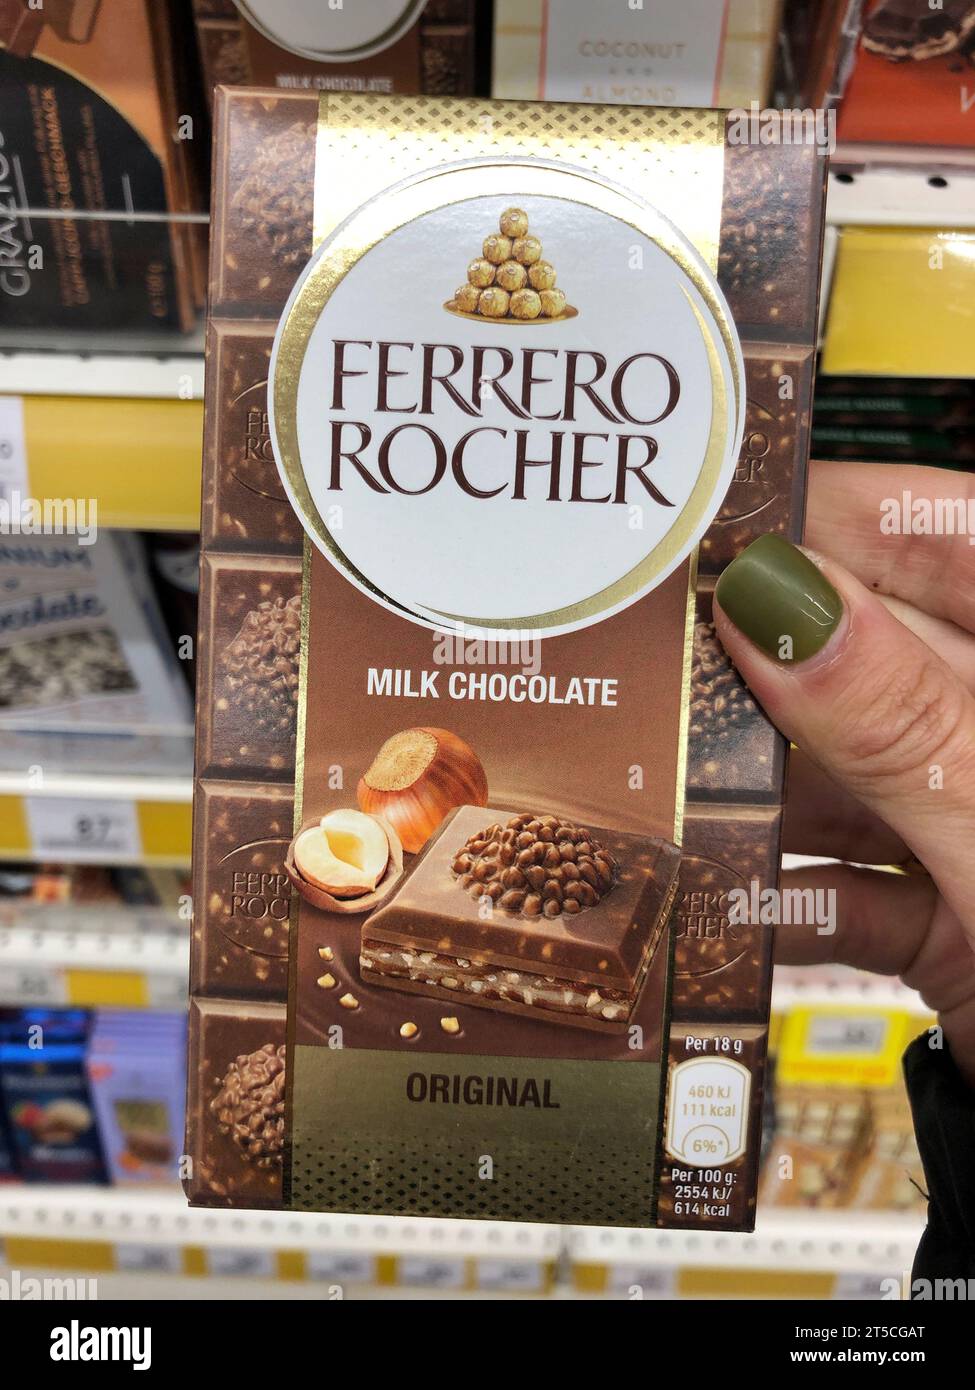 Ferrero rocher origins hi-res stock photography and images - Alamy